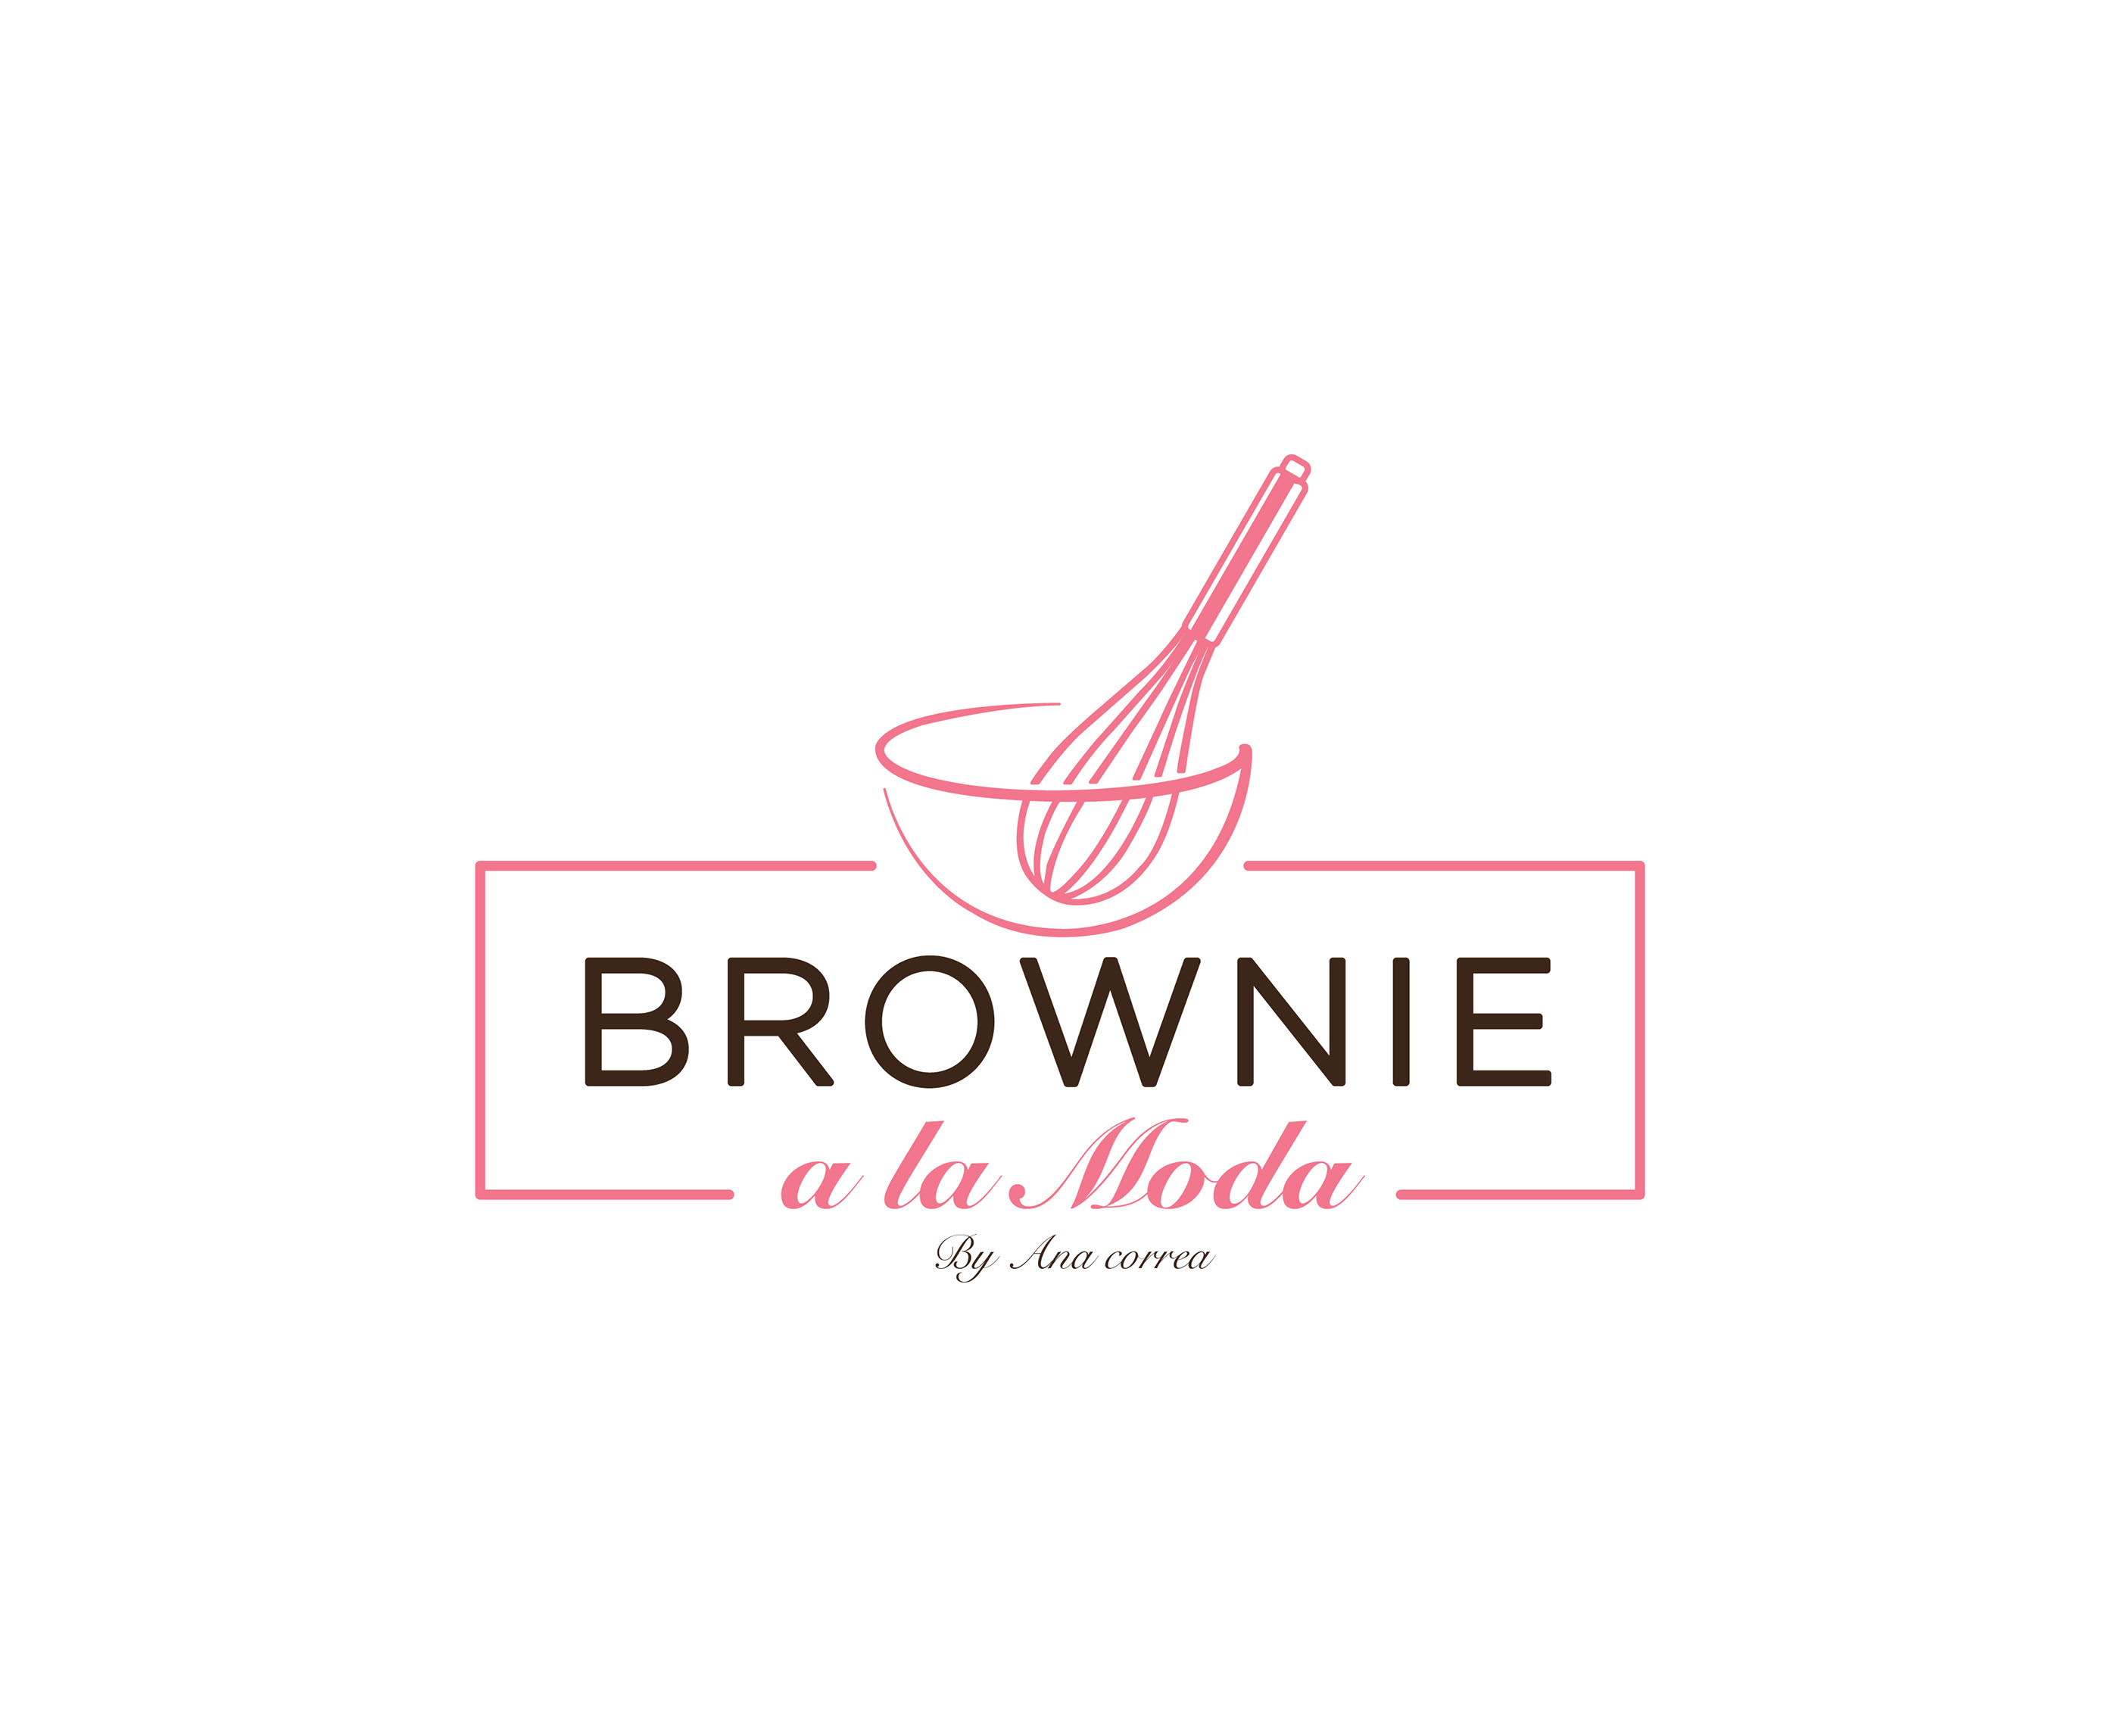 Brownie a Moda on Behance